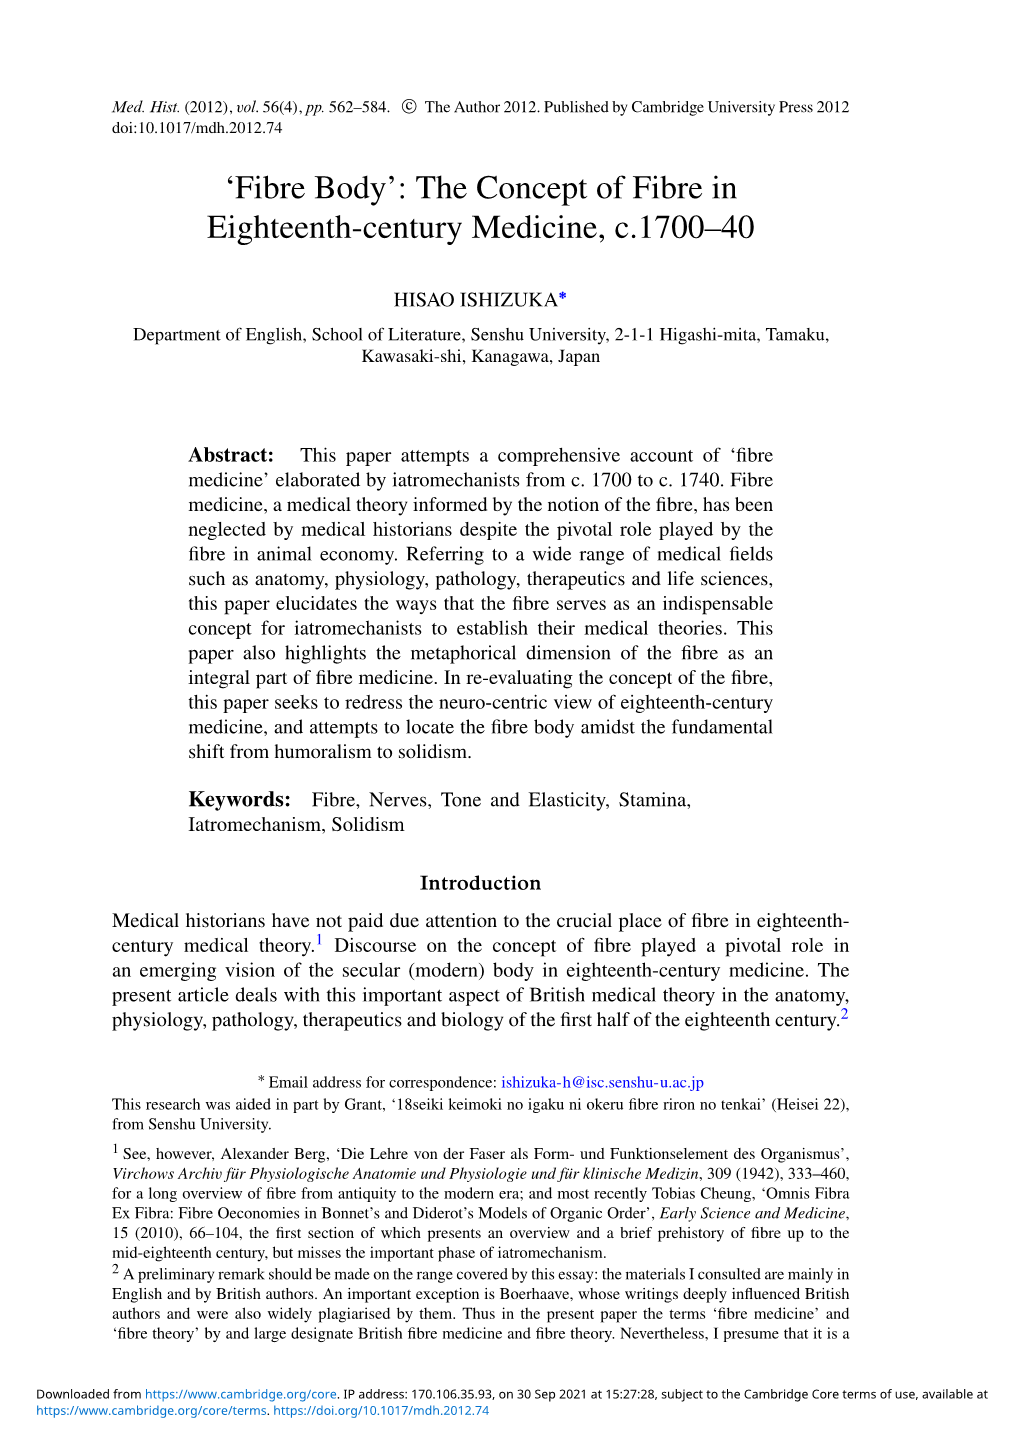 The Concept of Fibre in Eighteenth-Century Medicine, C.1700–40